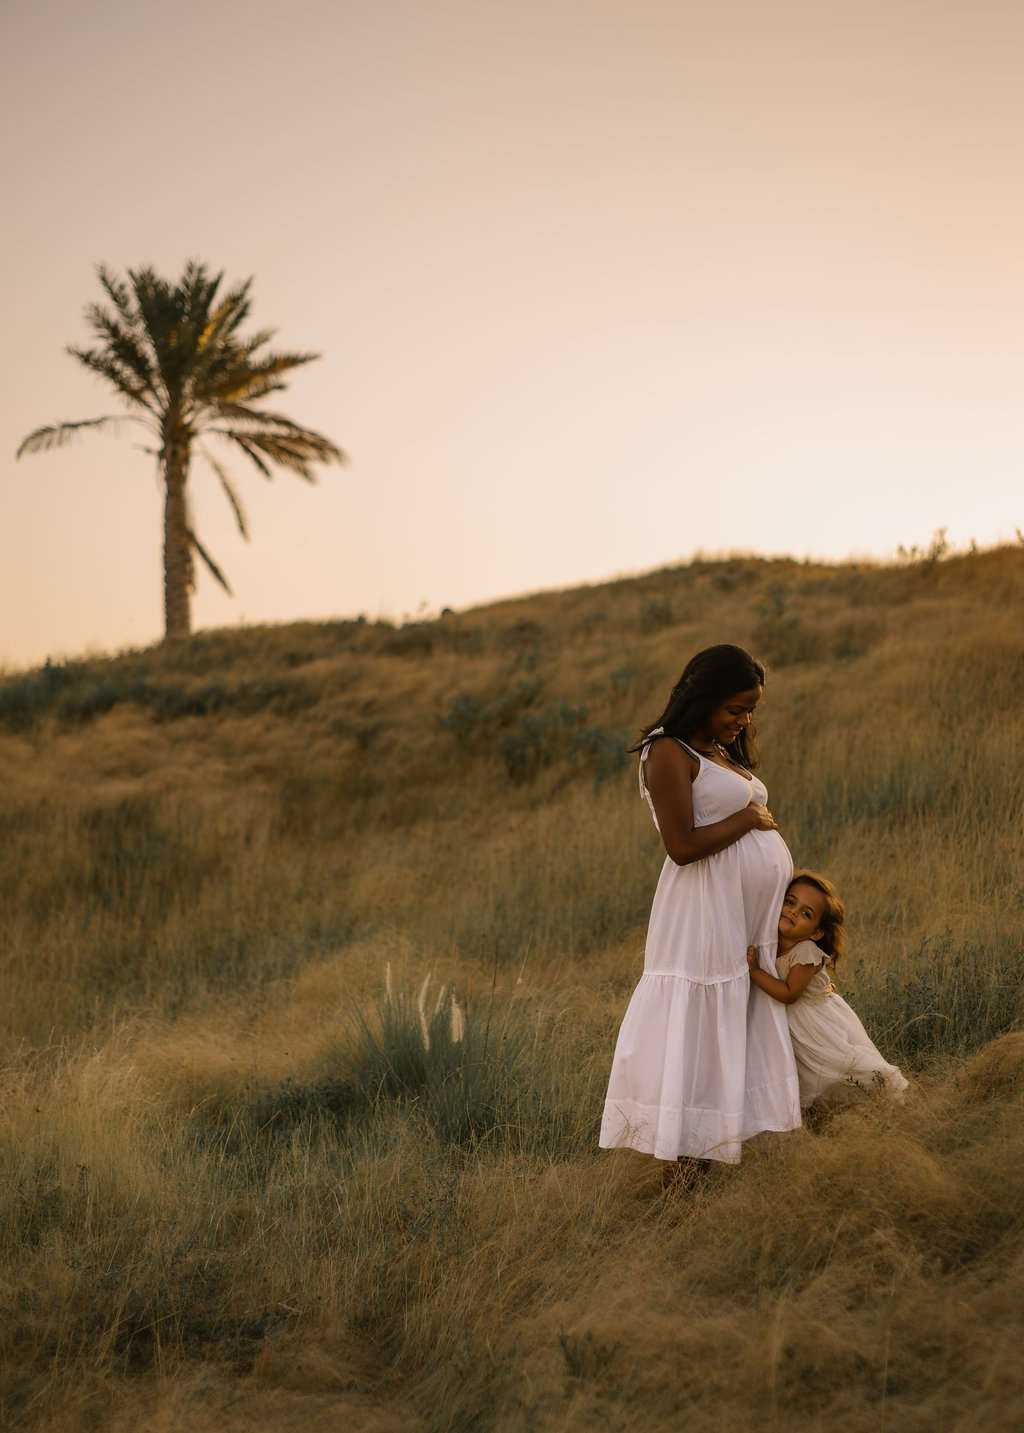 Abu-Dhabi-Maternity-Portrait-Photographer43